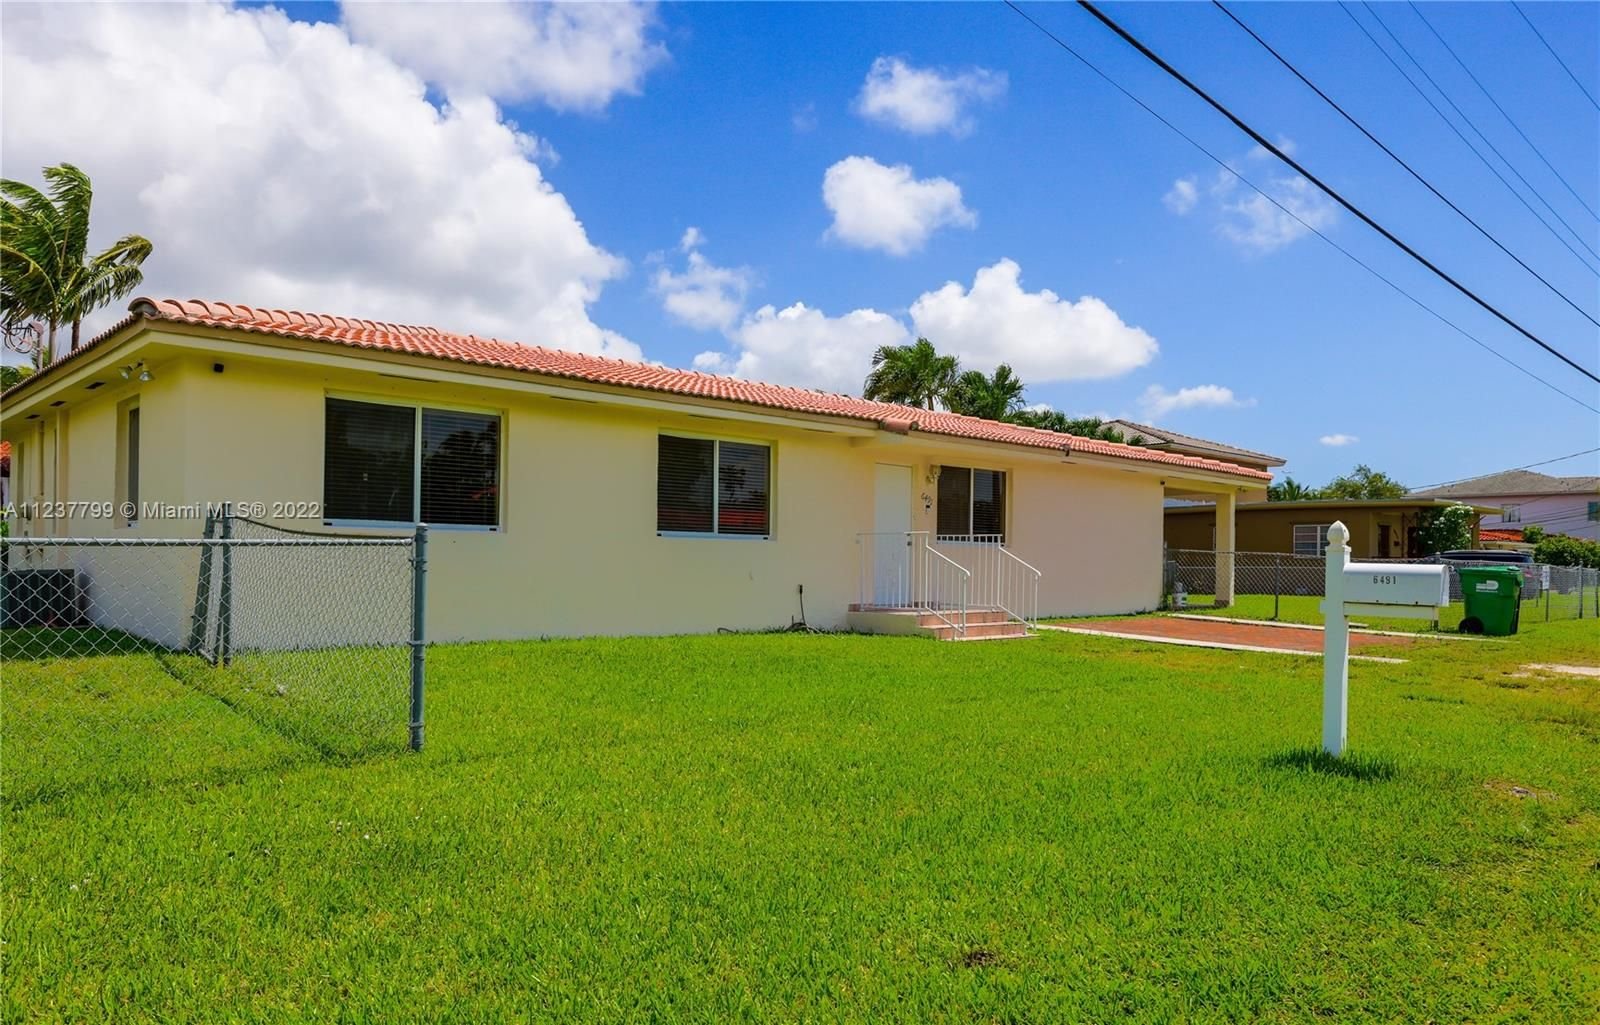 Real estate property located at 6491 27th St, Miami-Dade County, Miami, FL